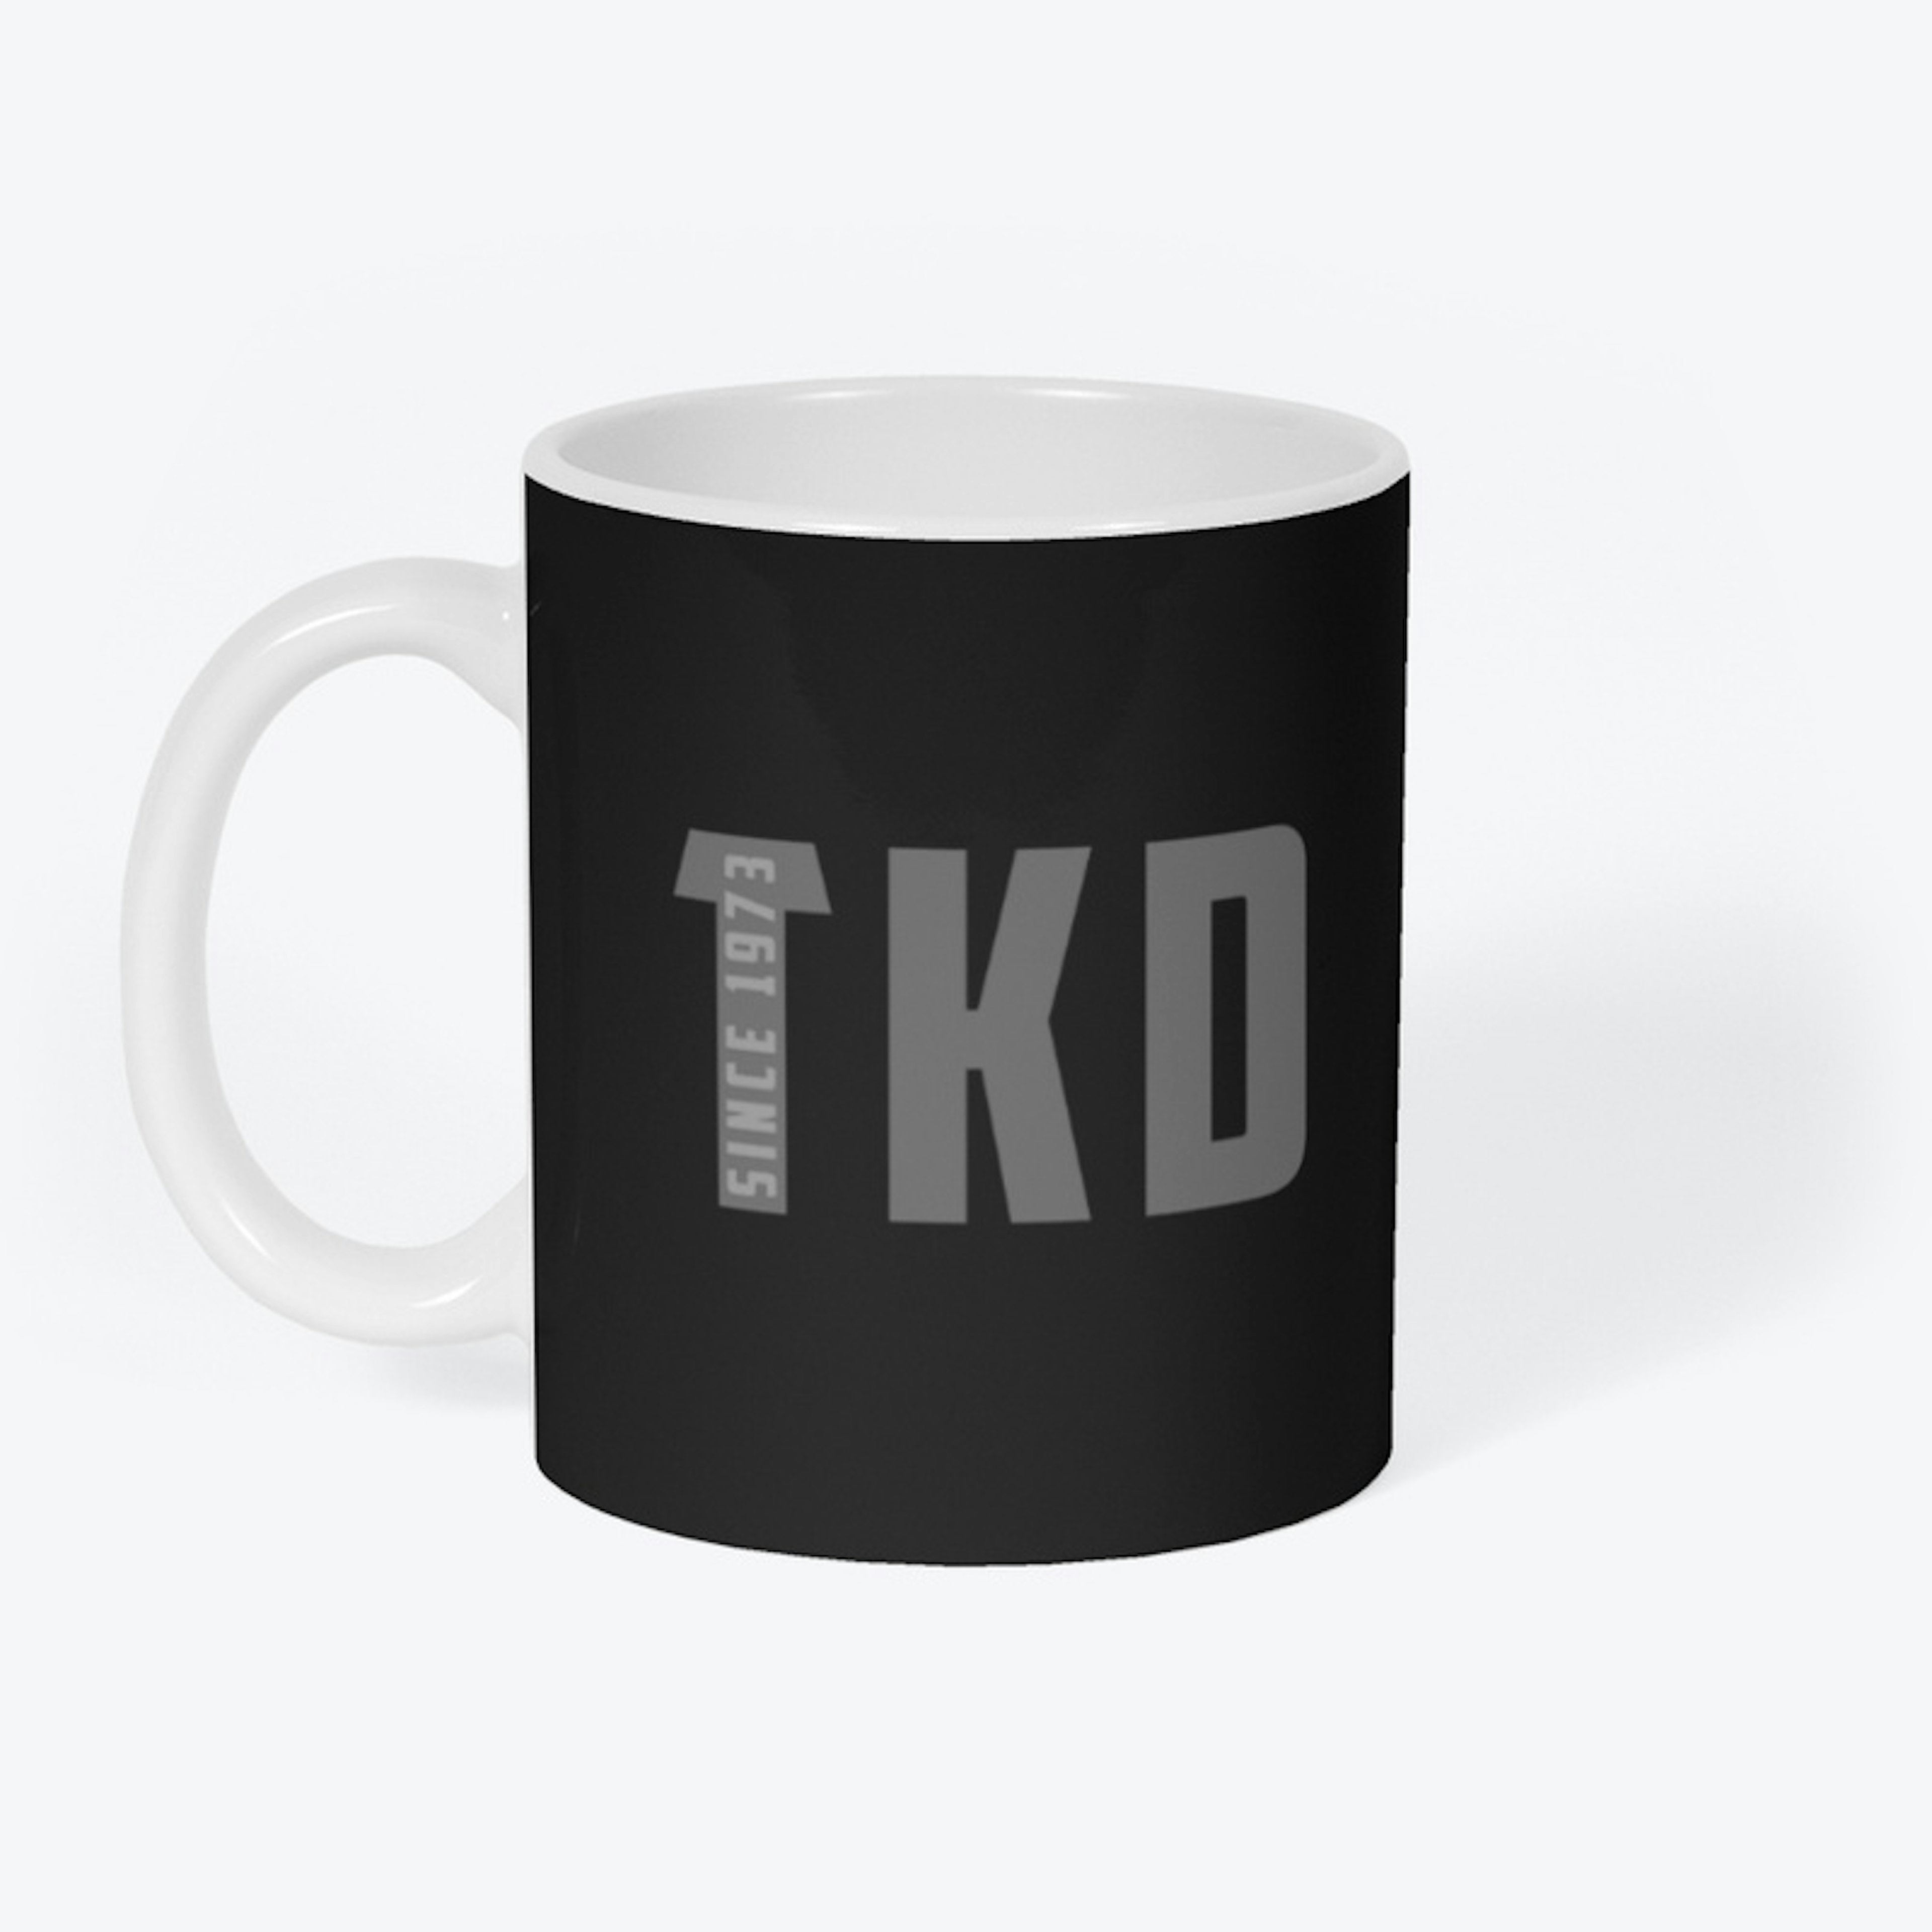 DG TKD Apparel and Gear